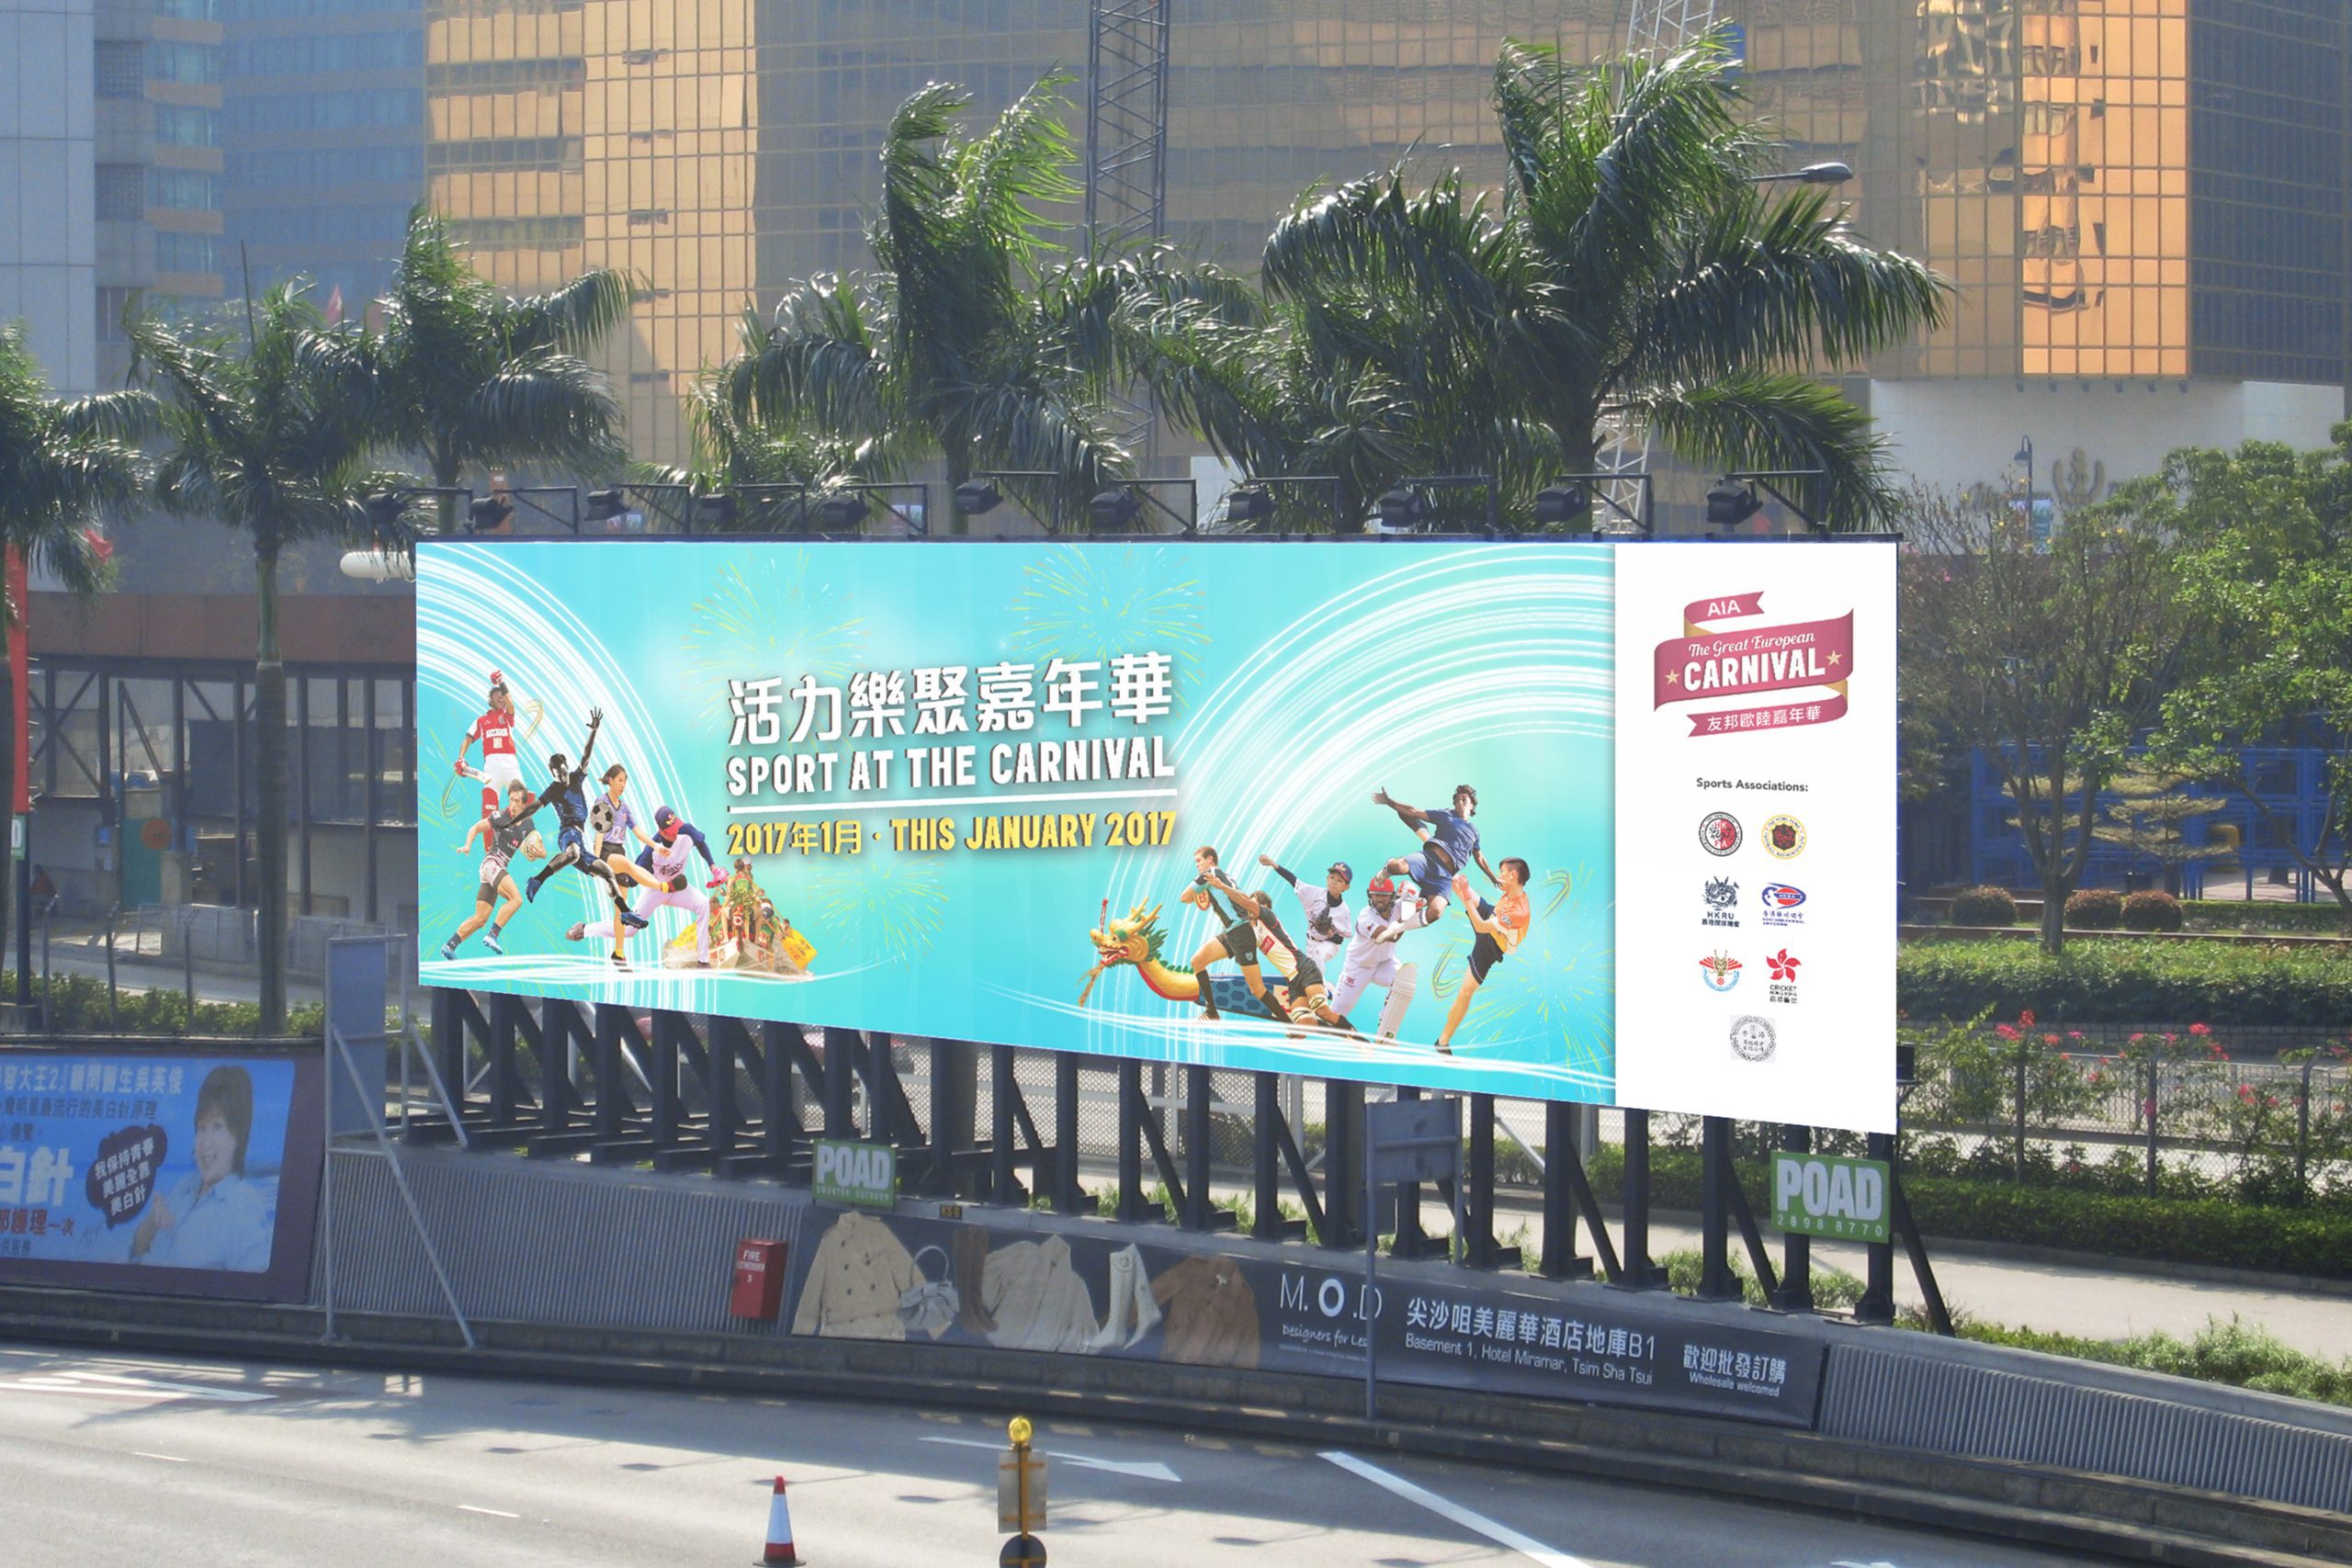 AIA Carnival Hong Kong Landscape Poster Design on road